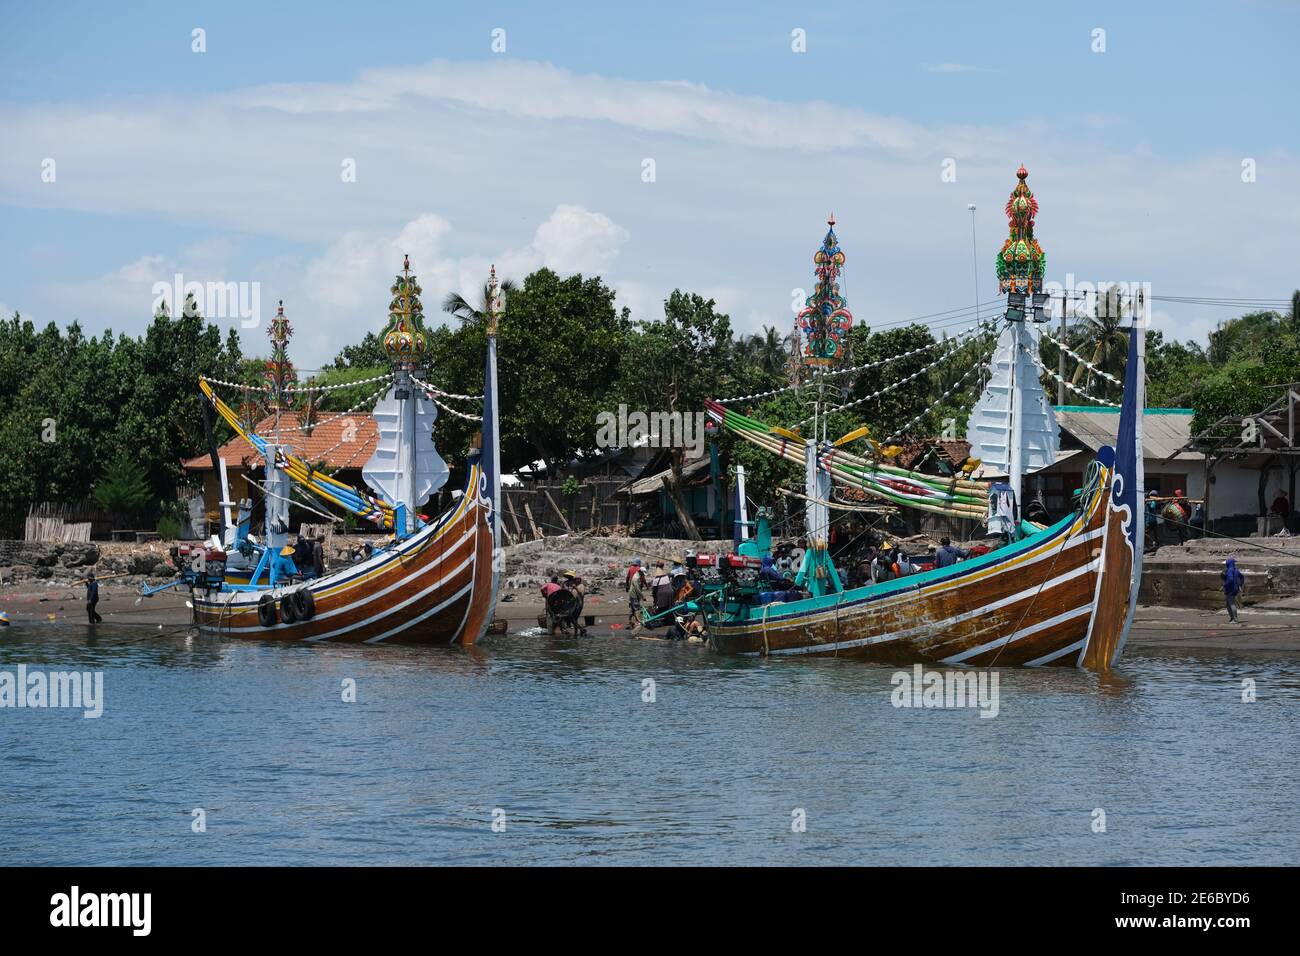 Indonesia Bali Negara - Pantai Pengambengan - Wooden fishing boats in Bugis style Stock Photo